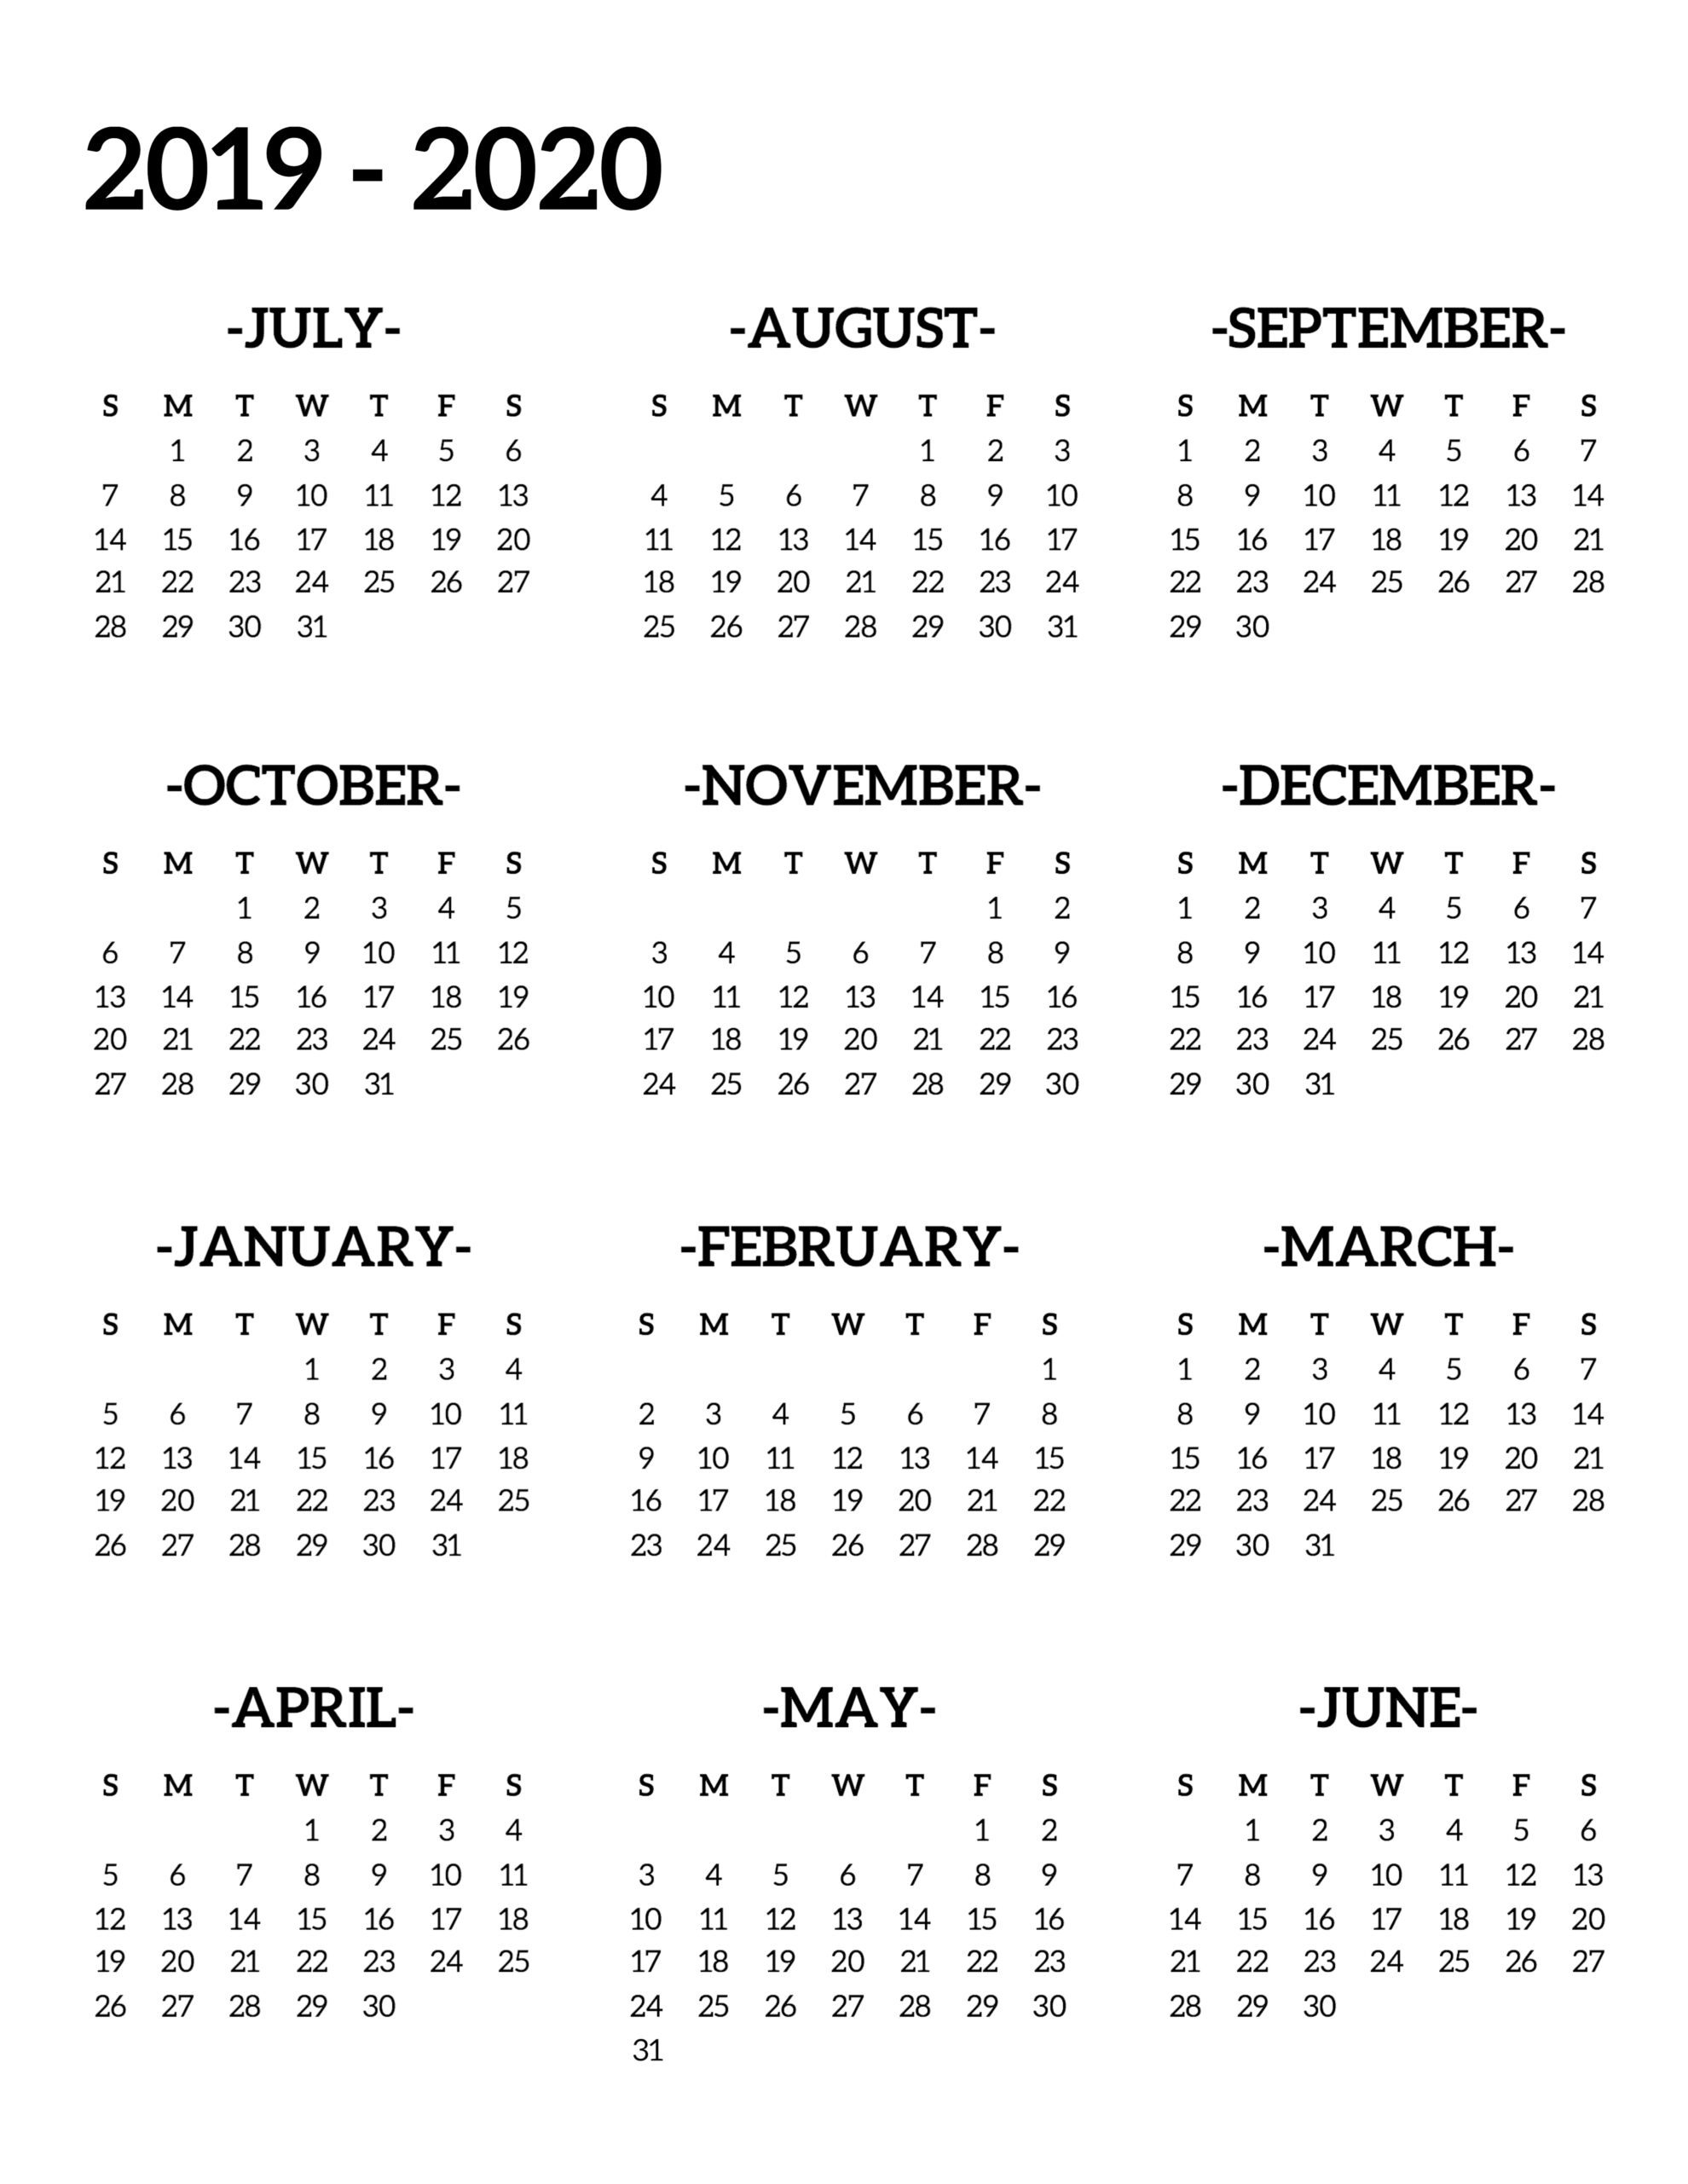 2019-2020 One Page School Calendar Printable - Paper Trail Design inside Free Printable Calendar July 2019-June 2020